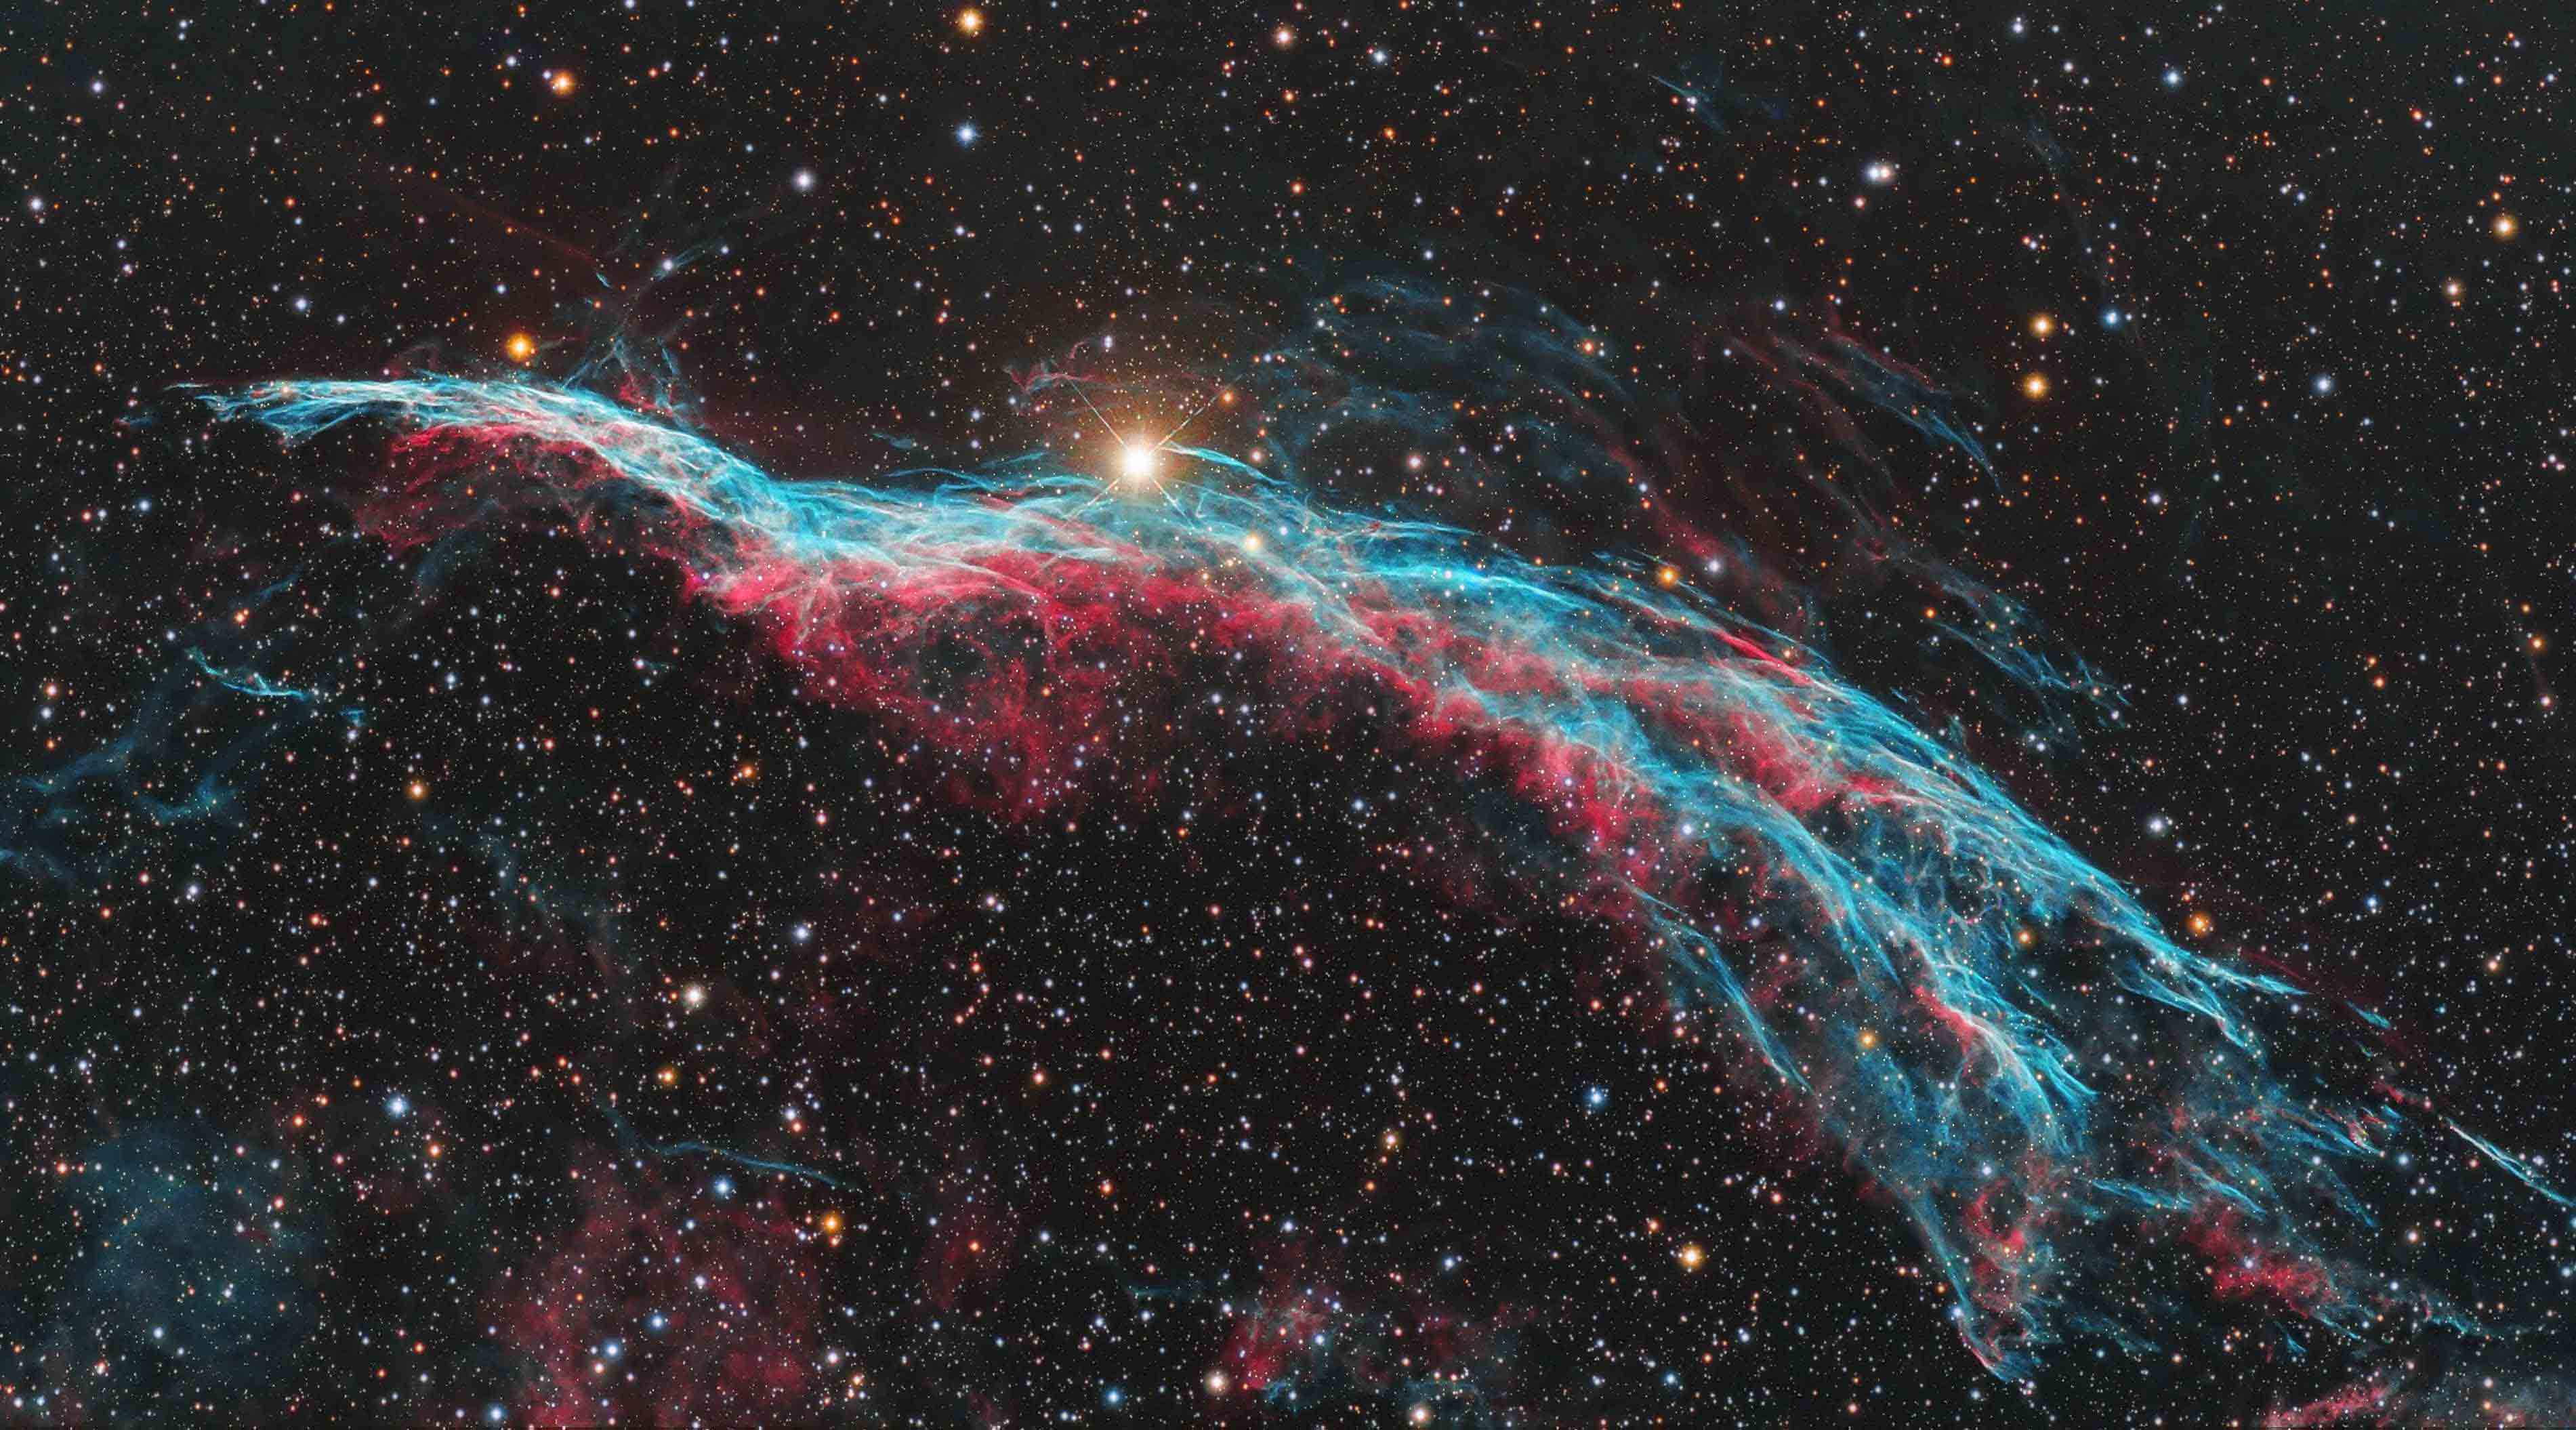 Veil West NGC6960